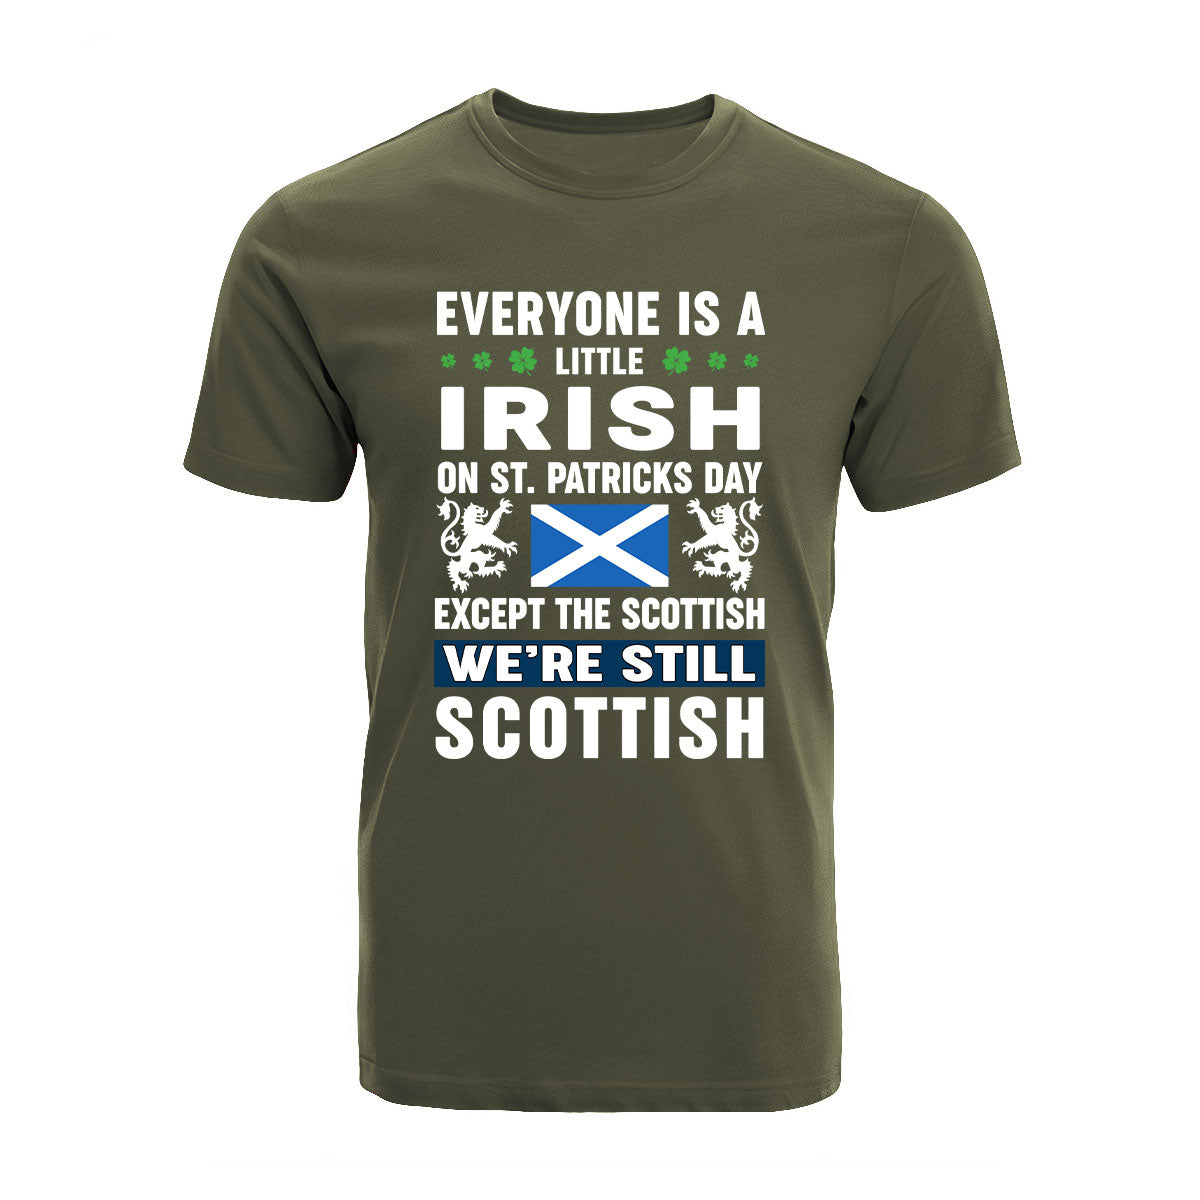 Irish on St Patrick's Day Except Scottish Unisex T-shirt